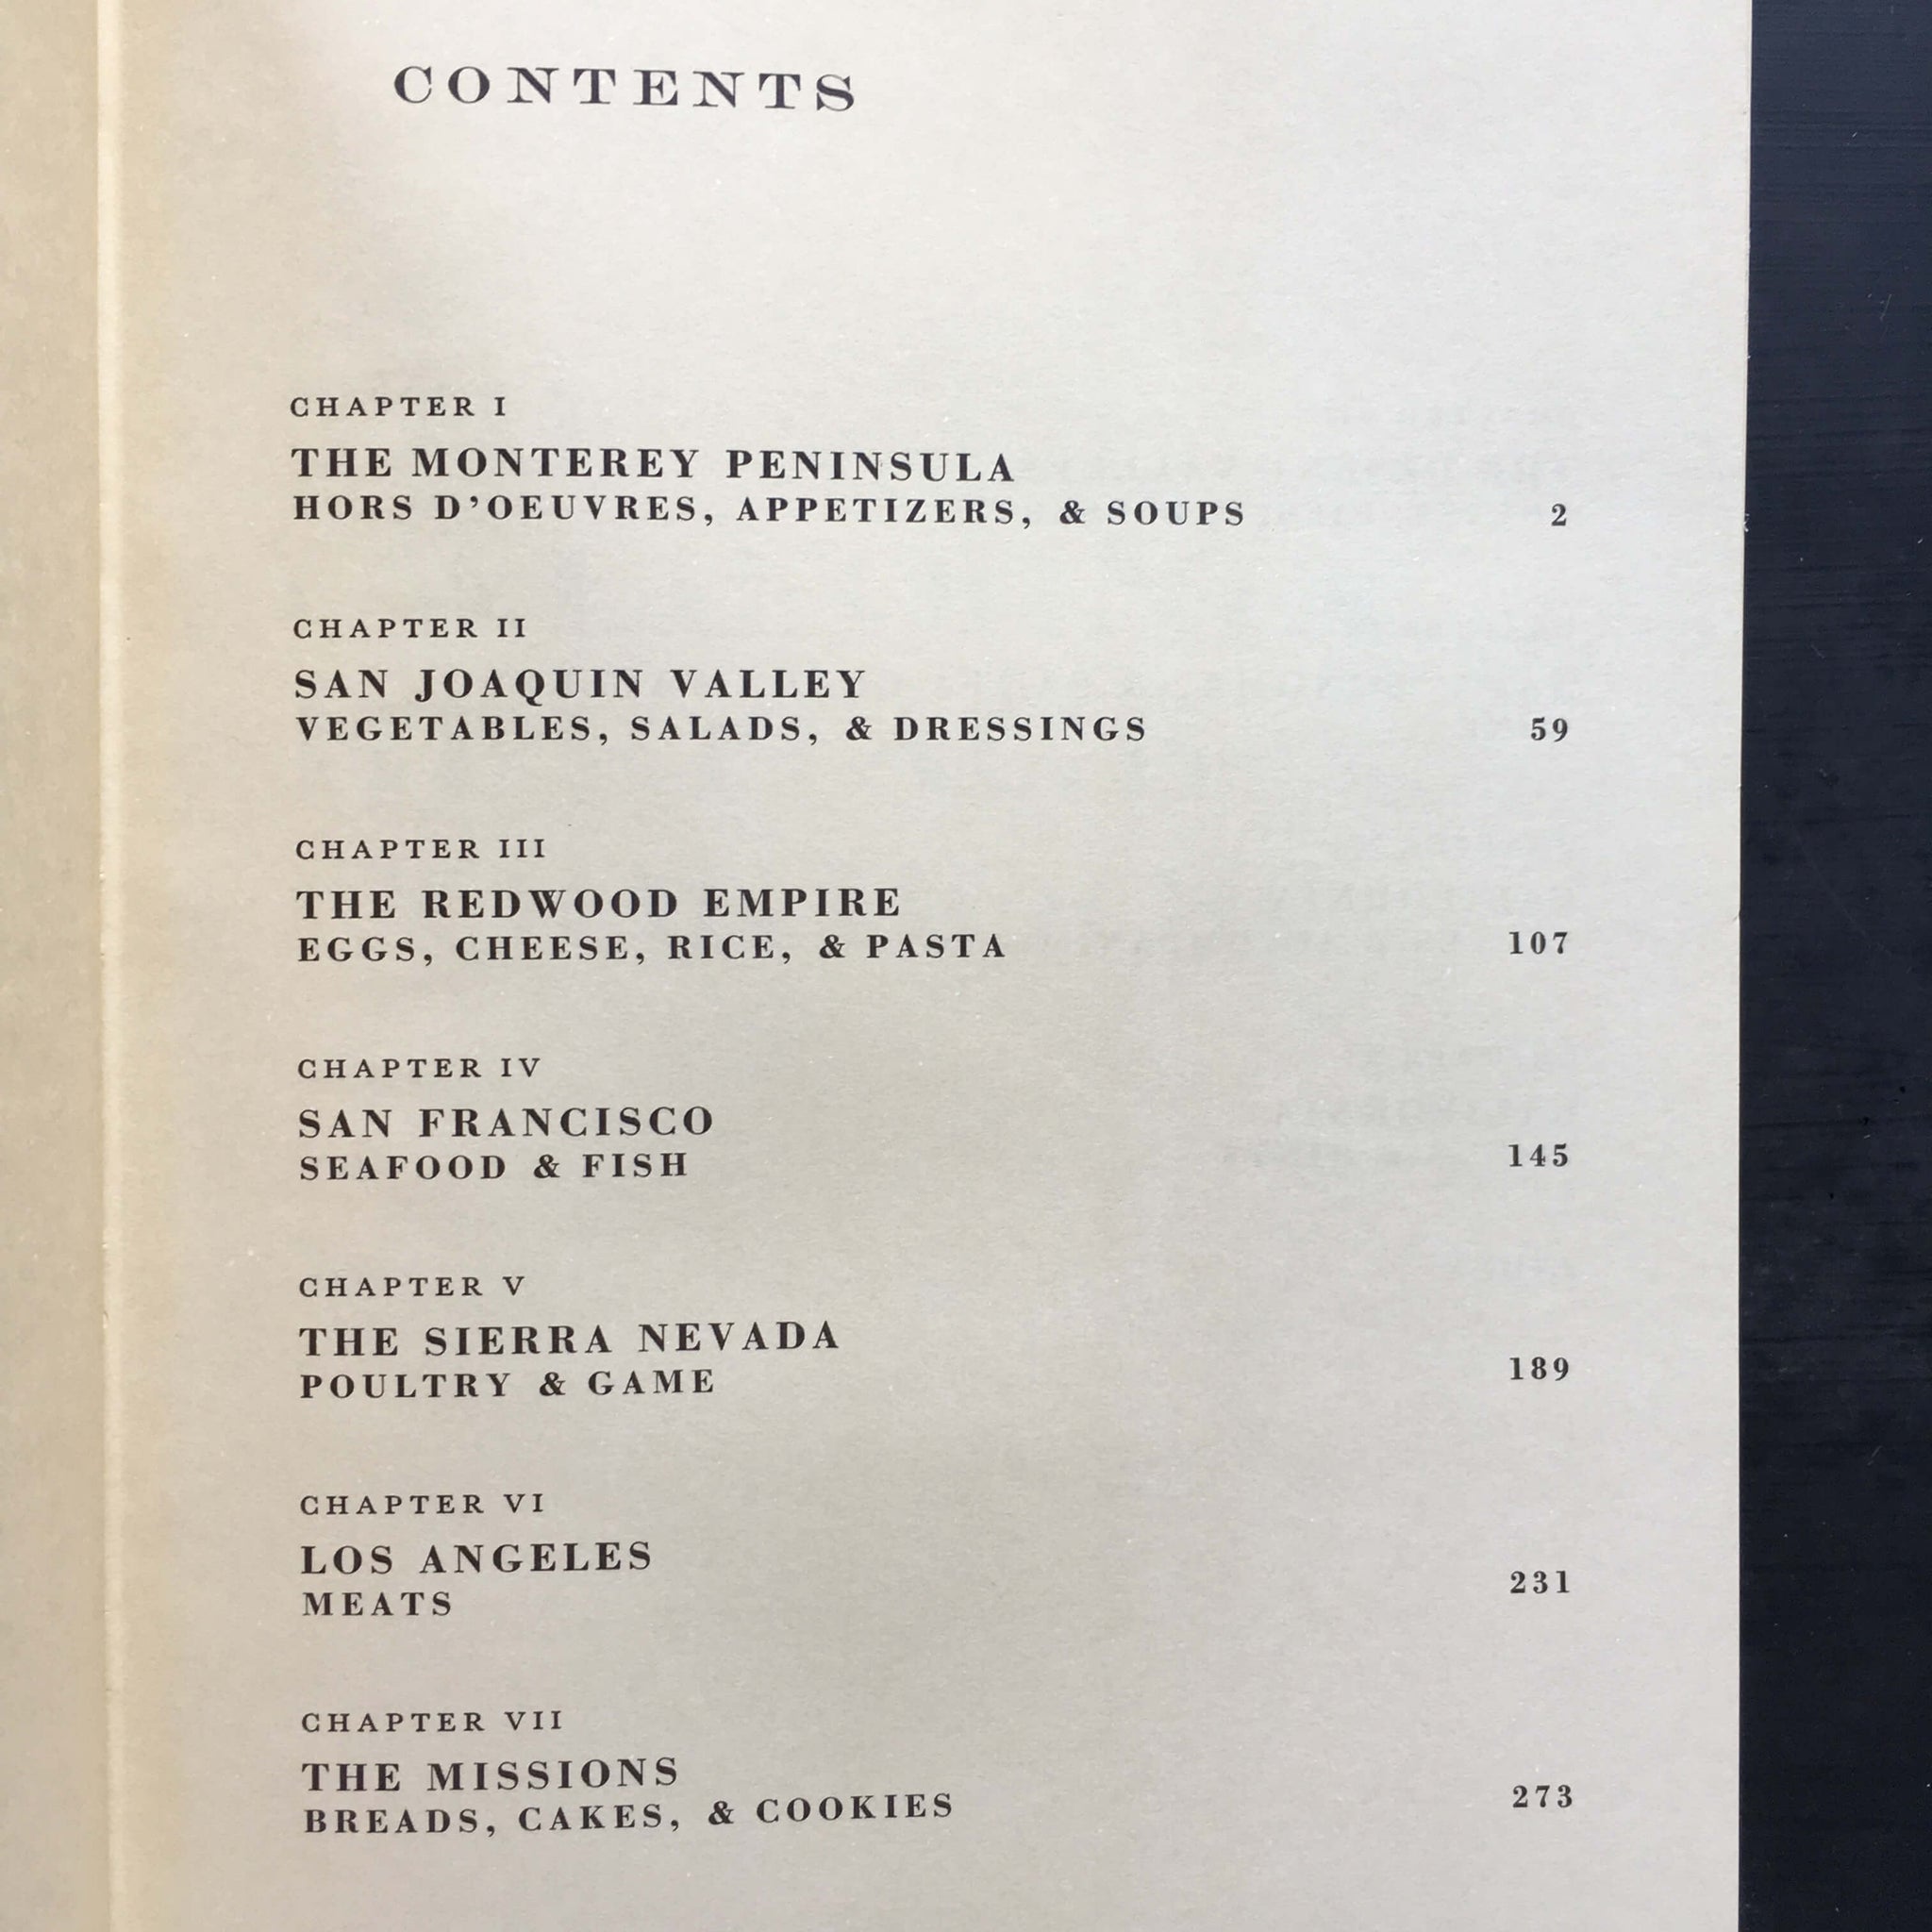 The California Heritage Cookbook - The Junior League of Pasadena - 1976 Edition 16th Printing